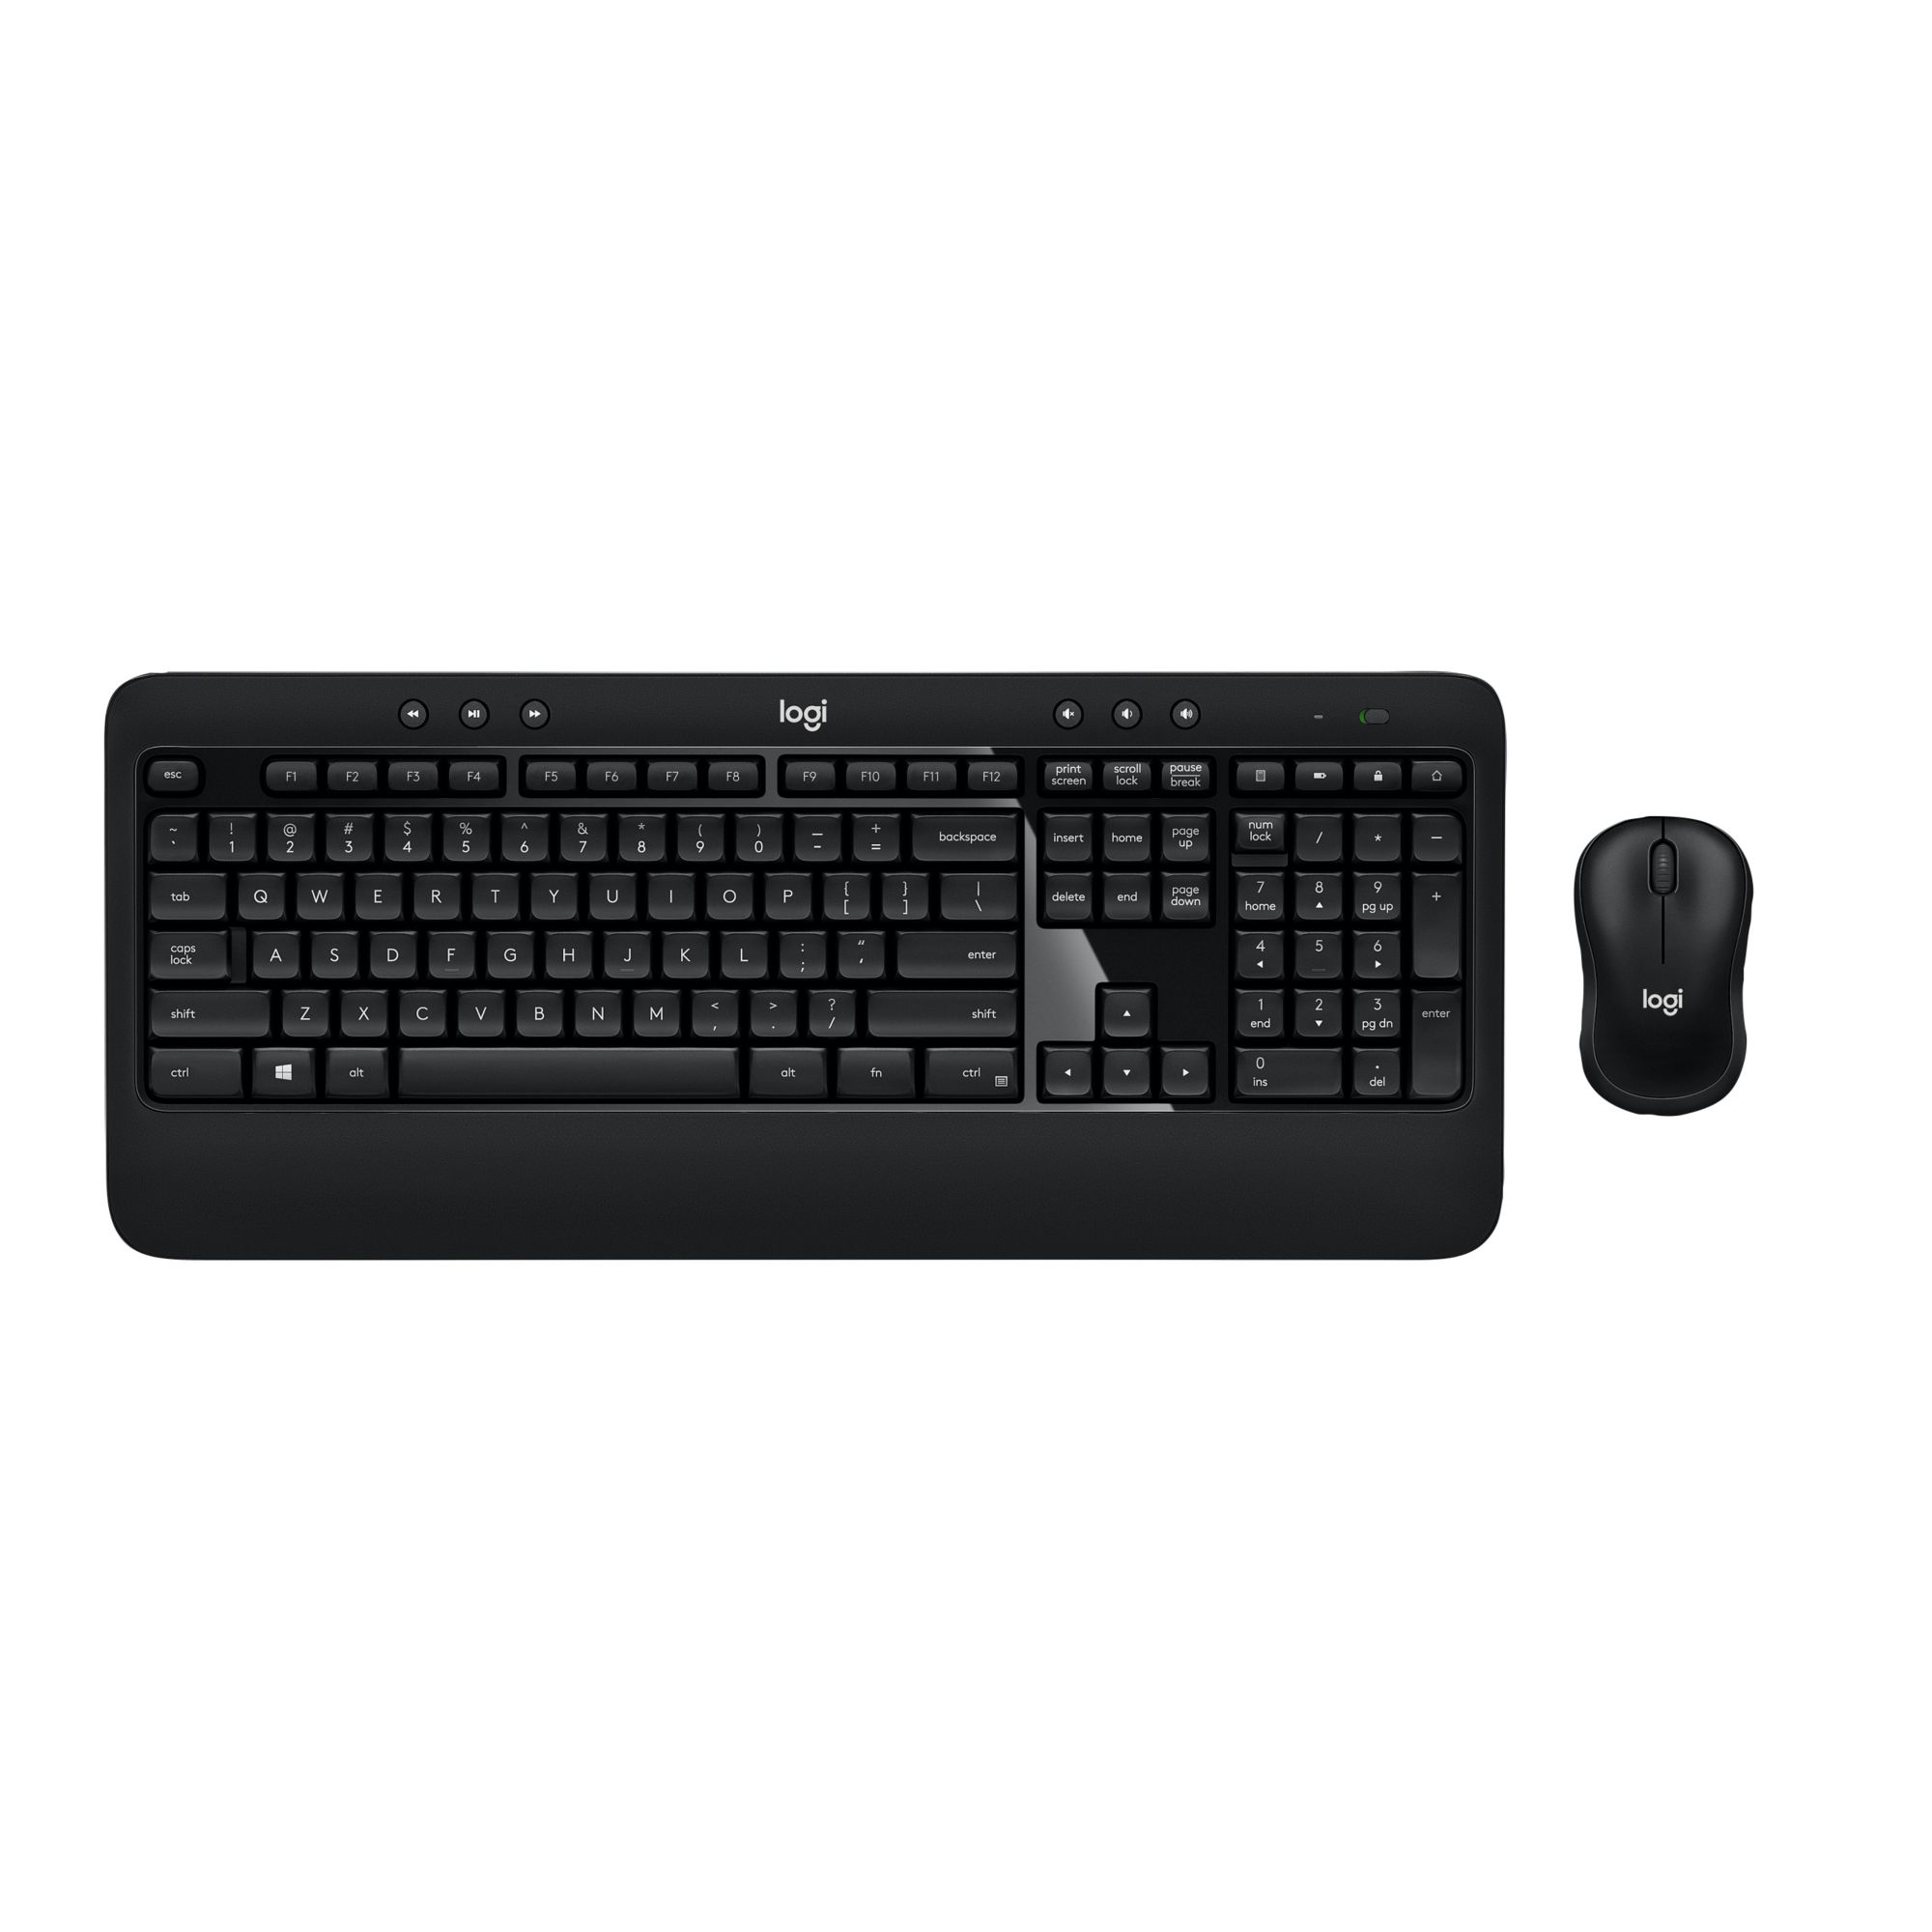 Logitech Advanced MK540 Wireless Keyboard and Mouse Combo Pack